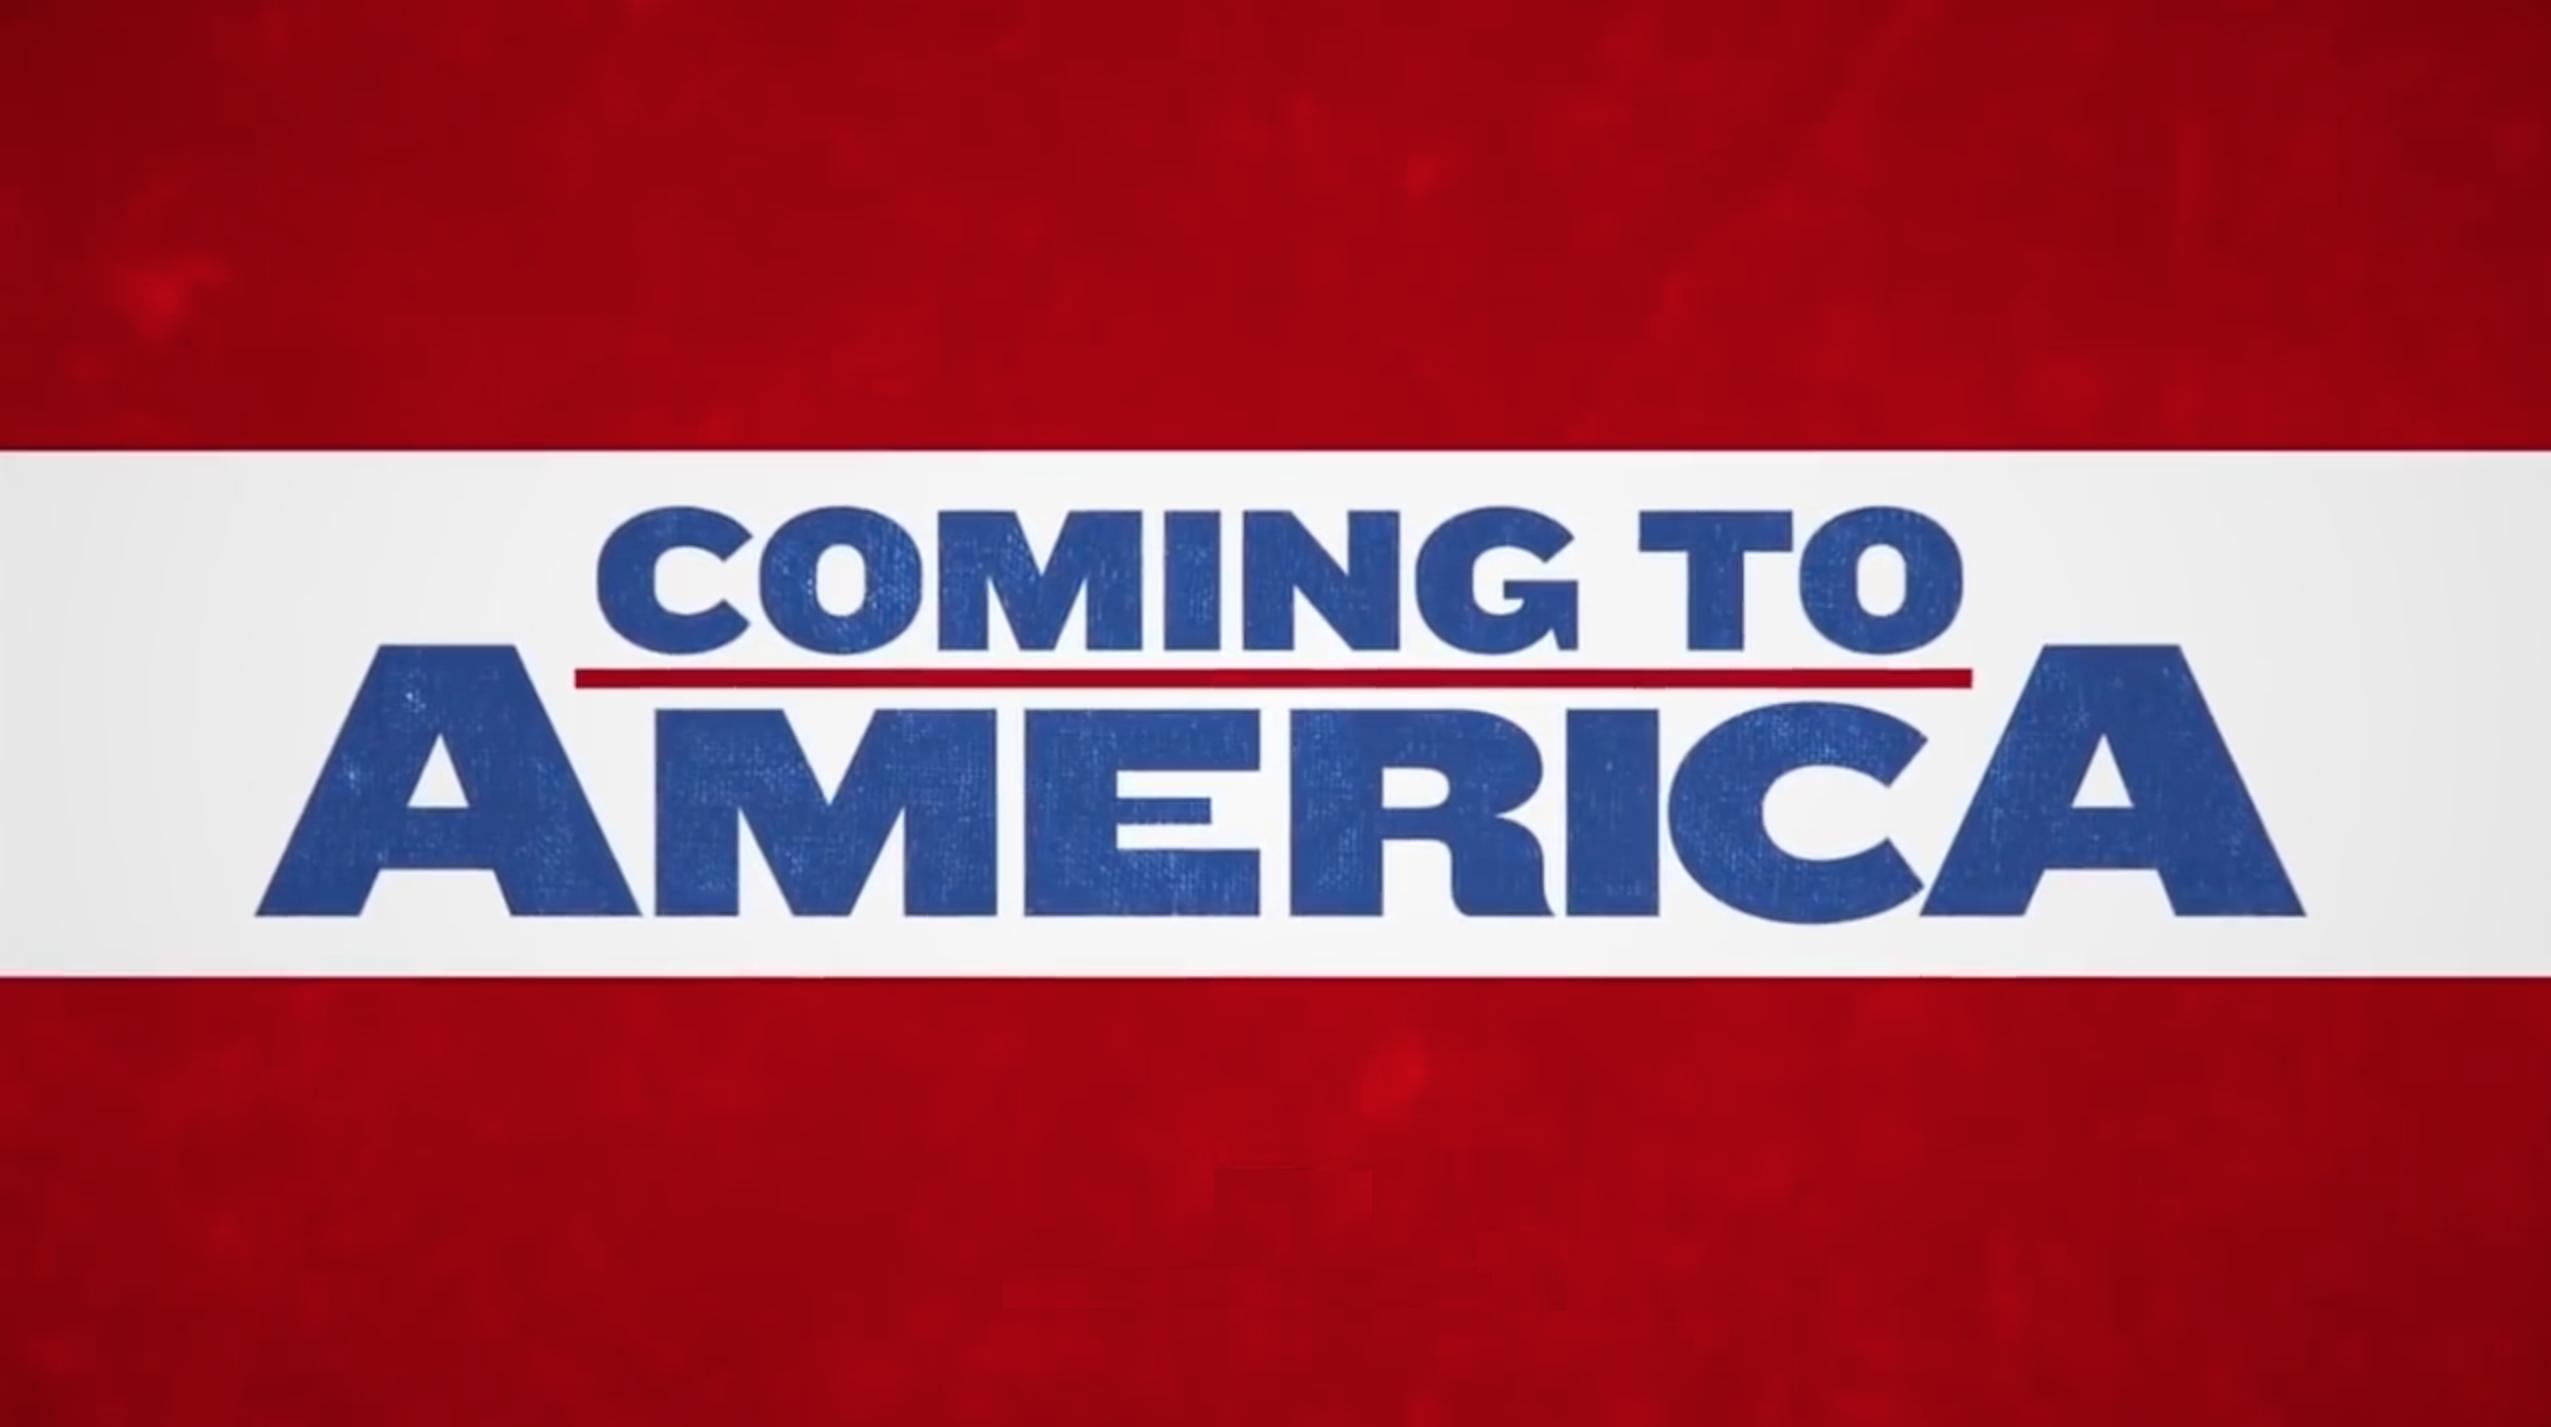 Filme: Das waren unsere Kinojahre: Coming to America | Season 3 | Episode 6